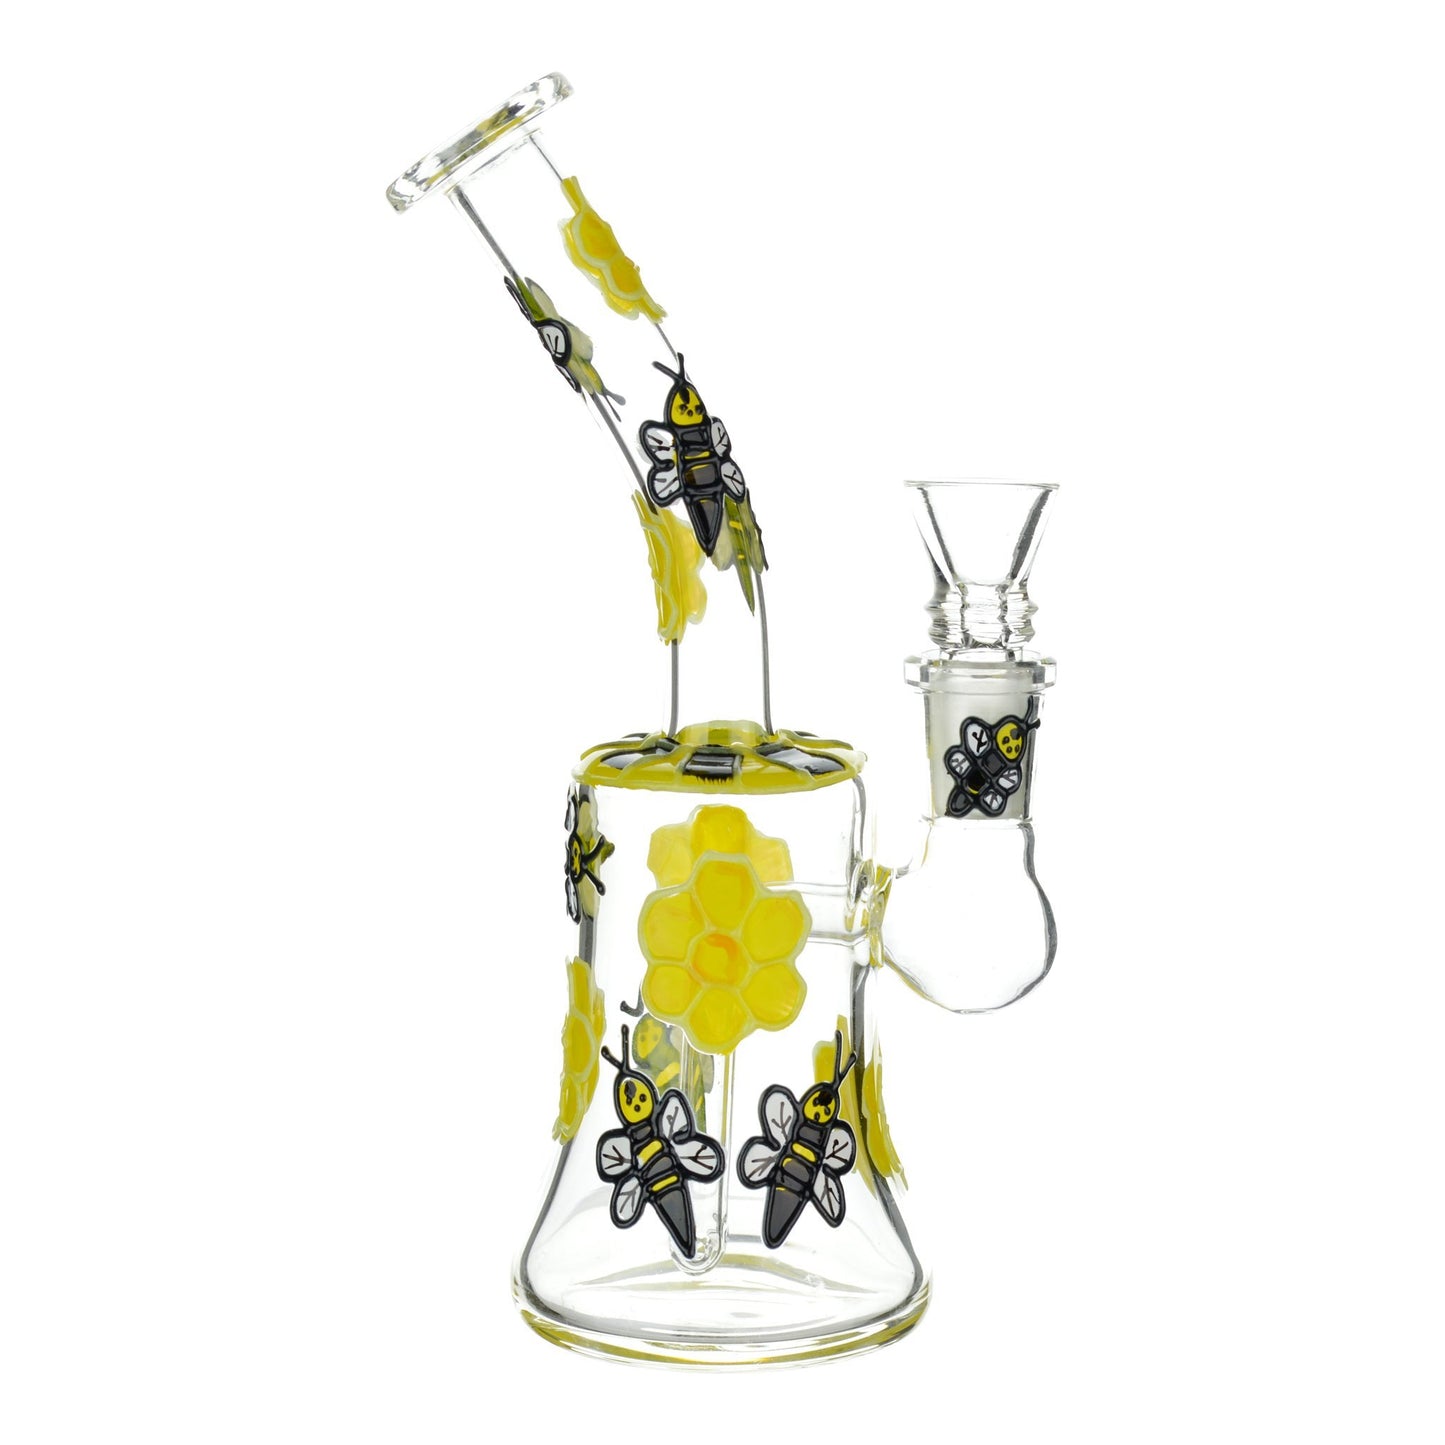 Full shot glass bong smoking device yellow flowers honeybee mouthpiece facing left bowl facing right